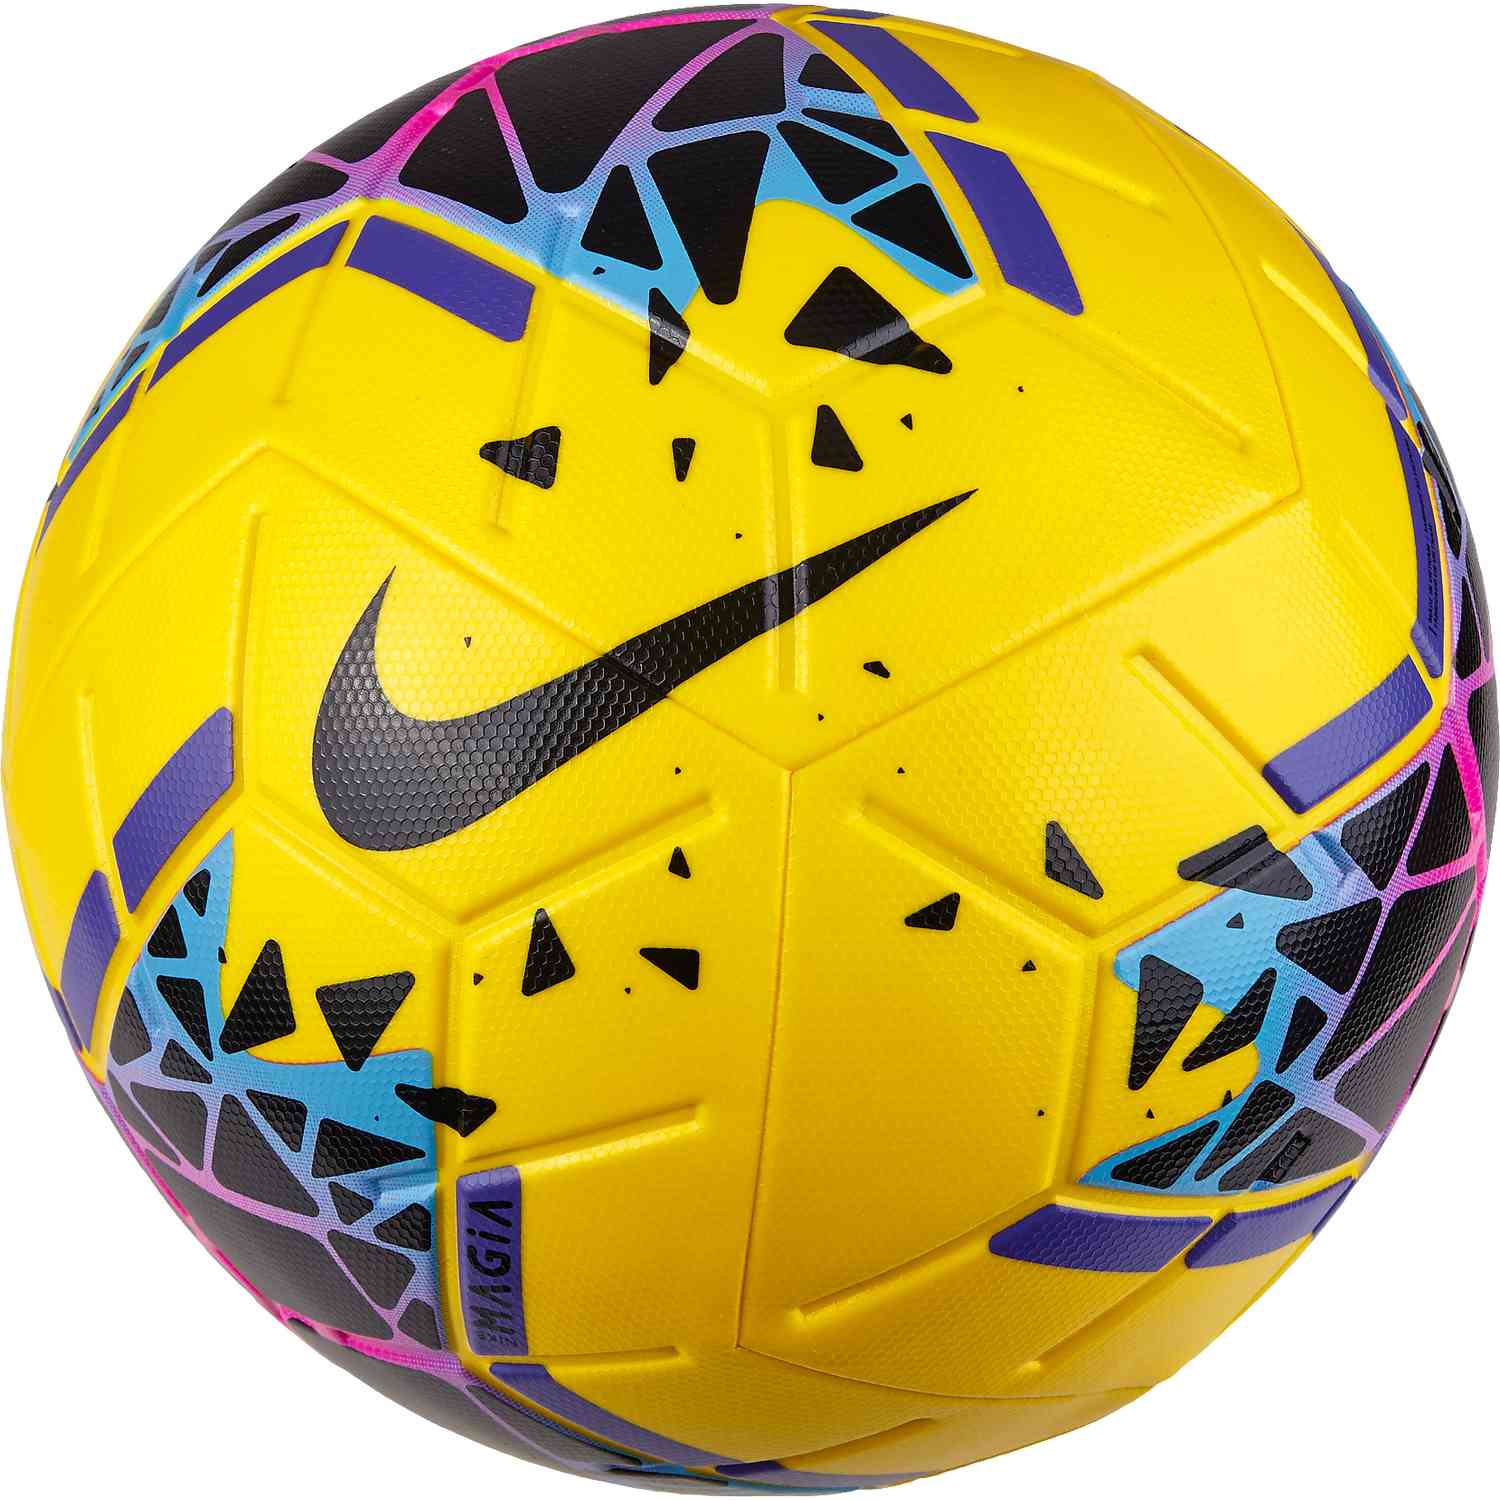 Nike Magia Hi-vis Match Soccer Ball - Yellow/Black/Purple - Soccer 